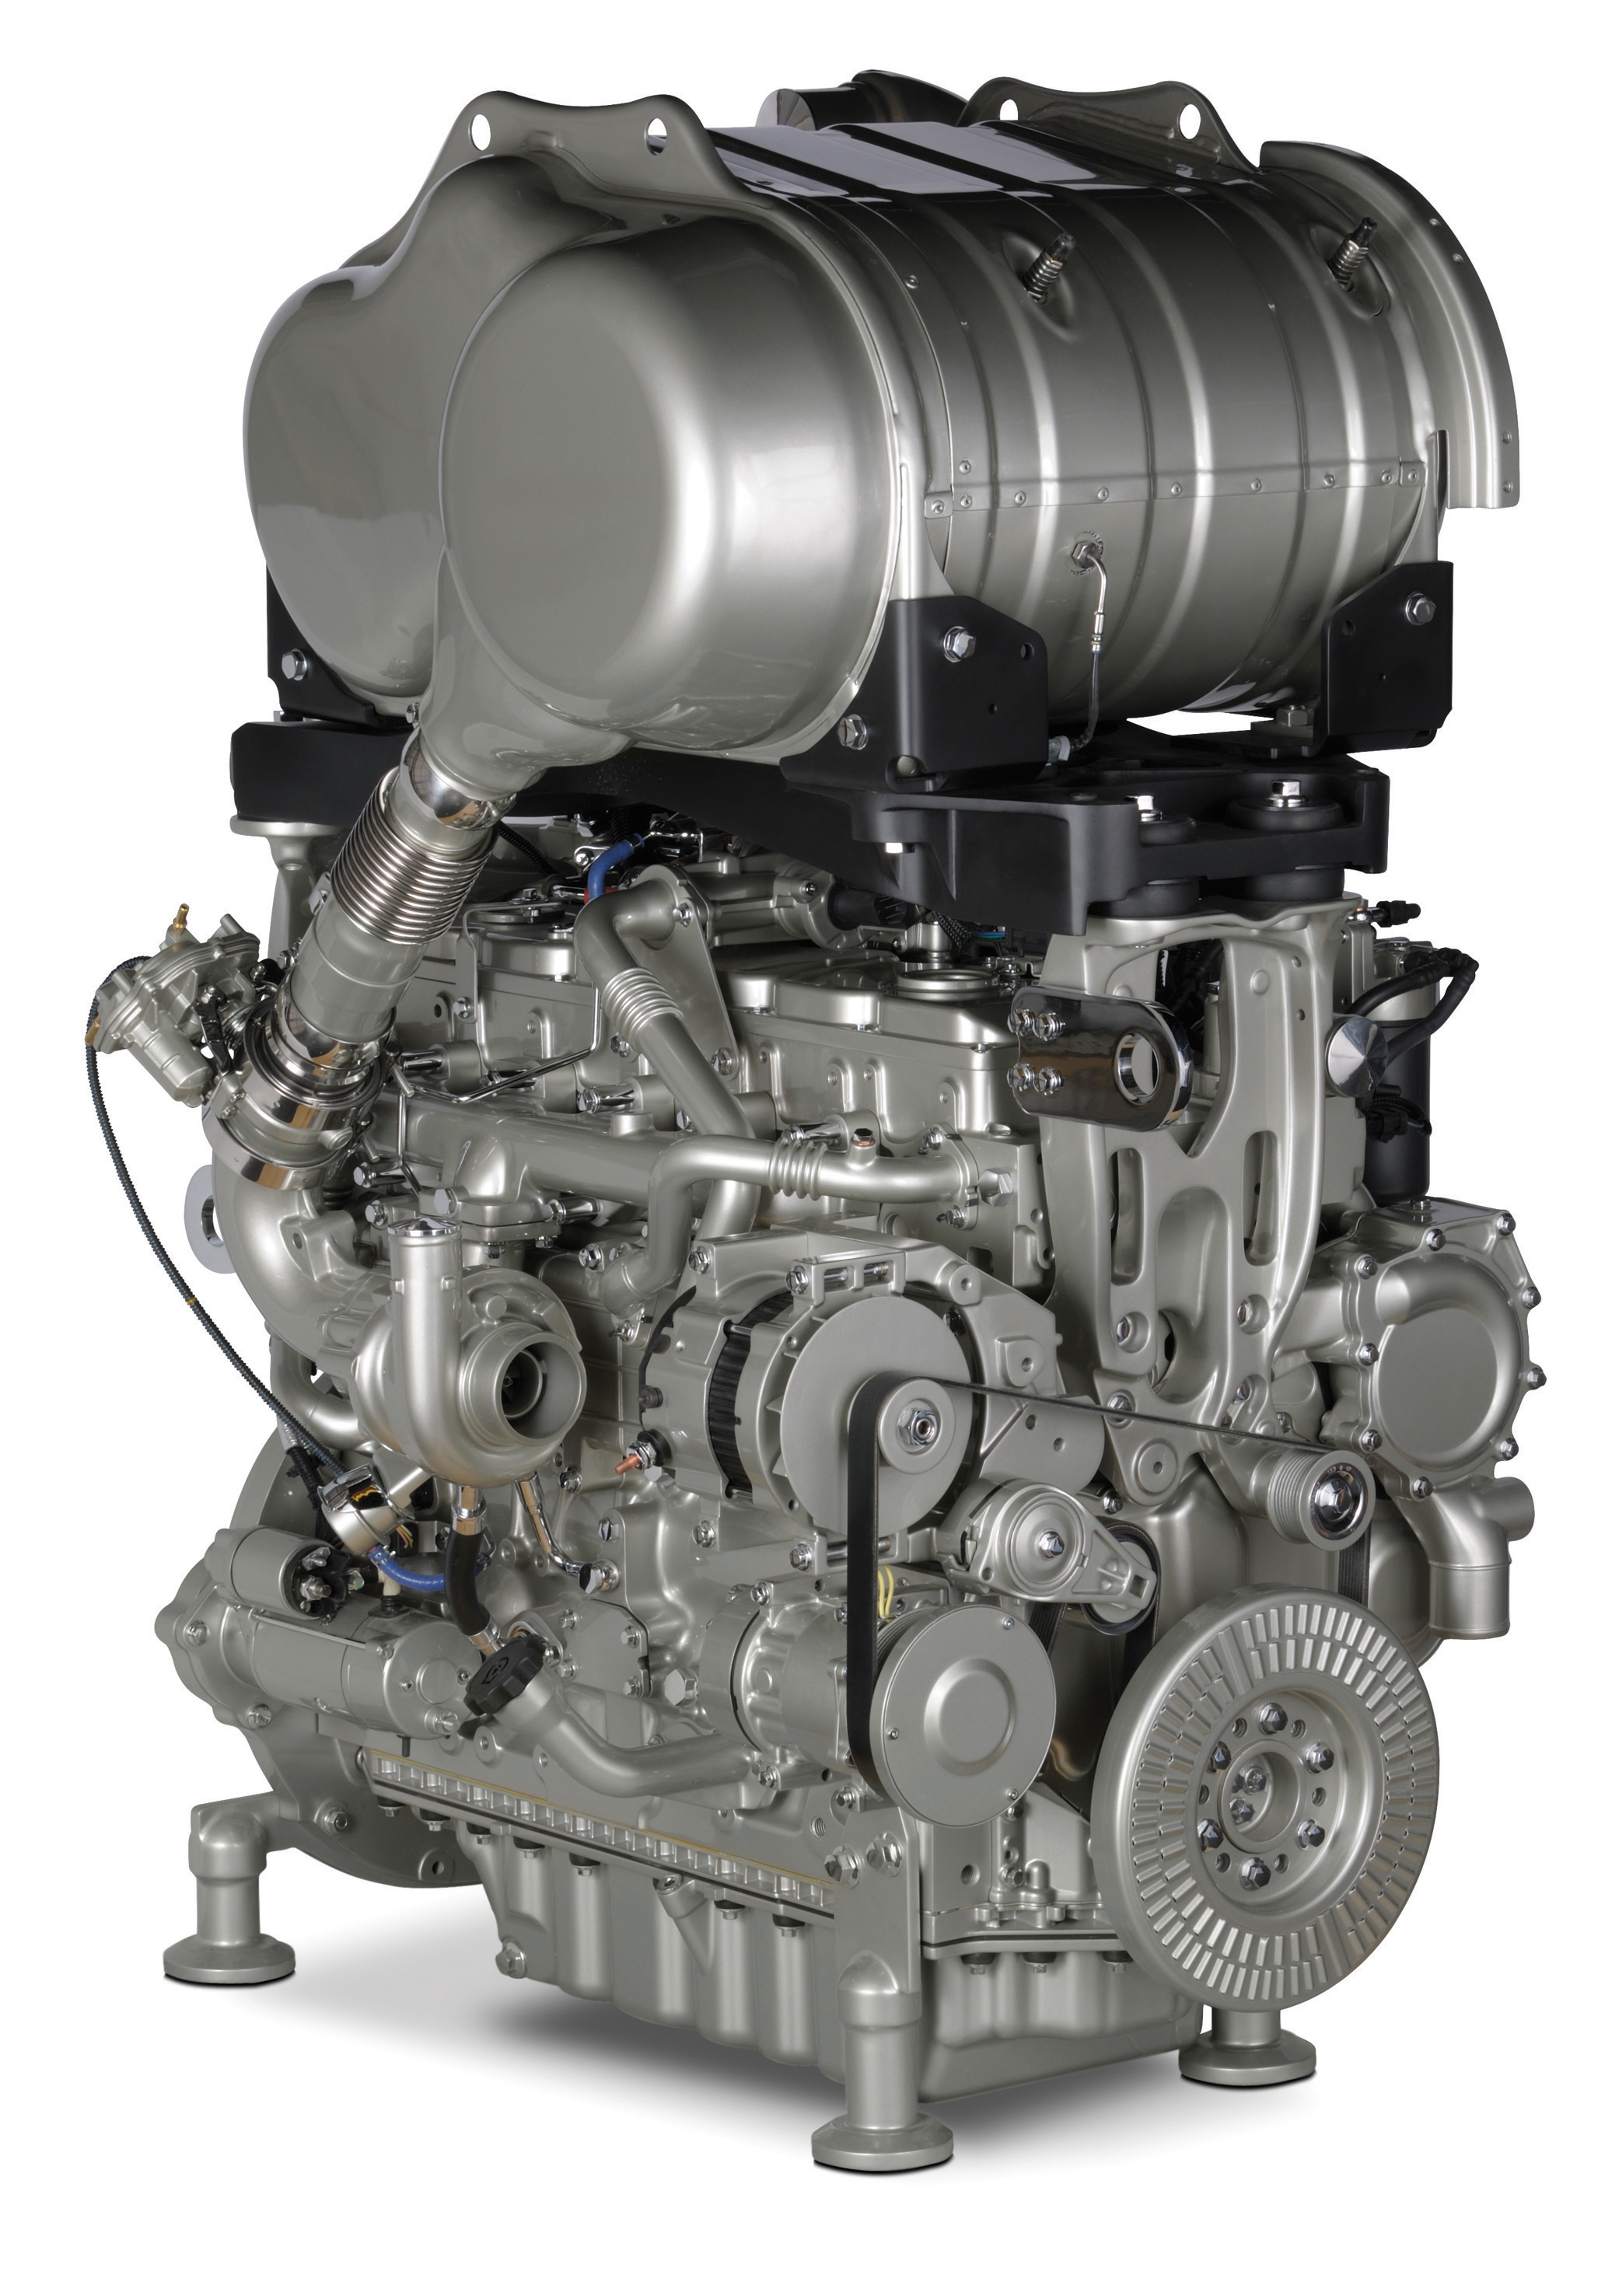 Perkins 1206 engine